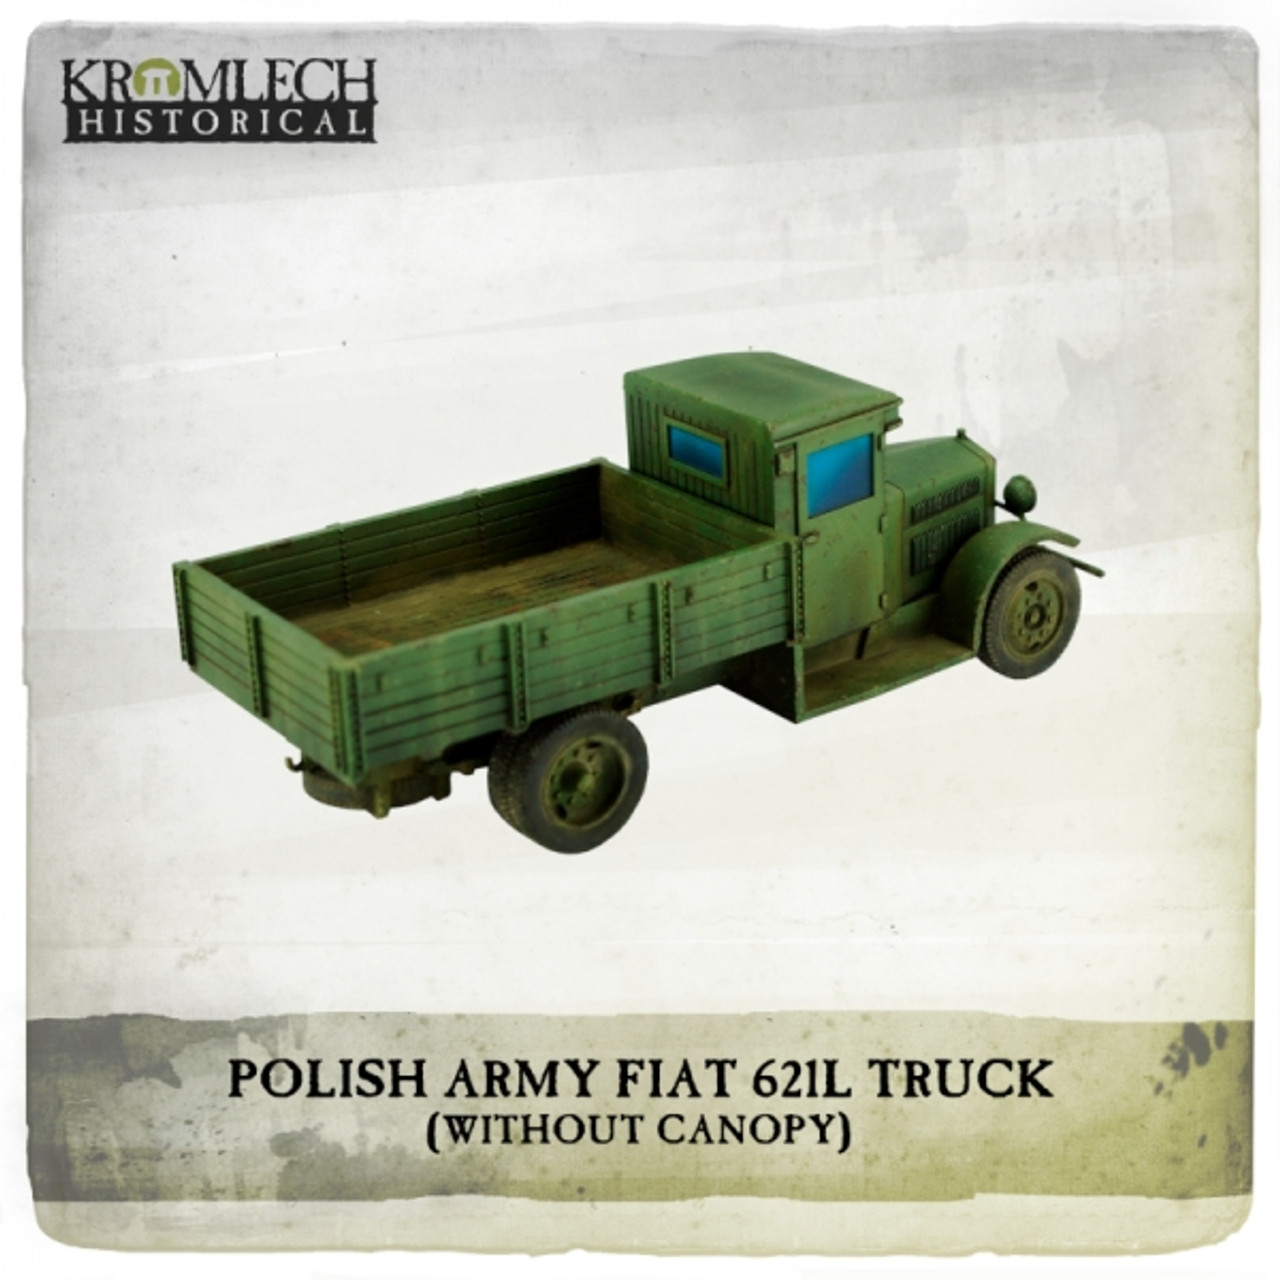 Polish Army FIAT 621L truck - KHWW2018